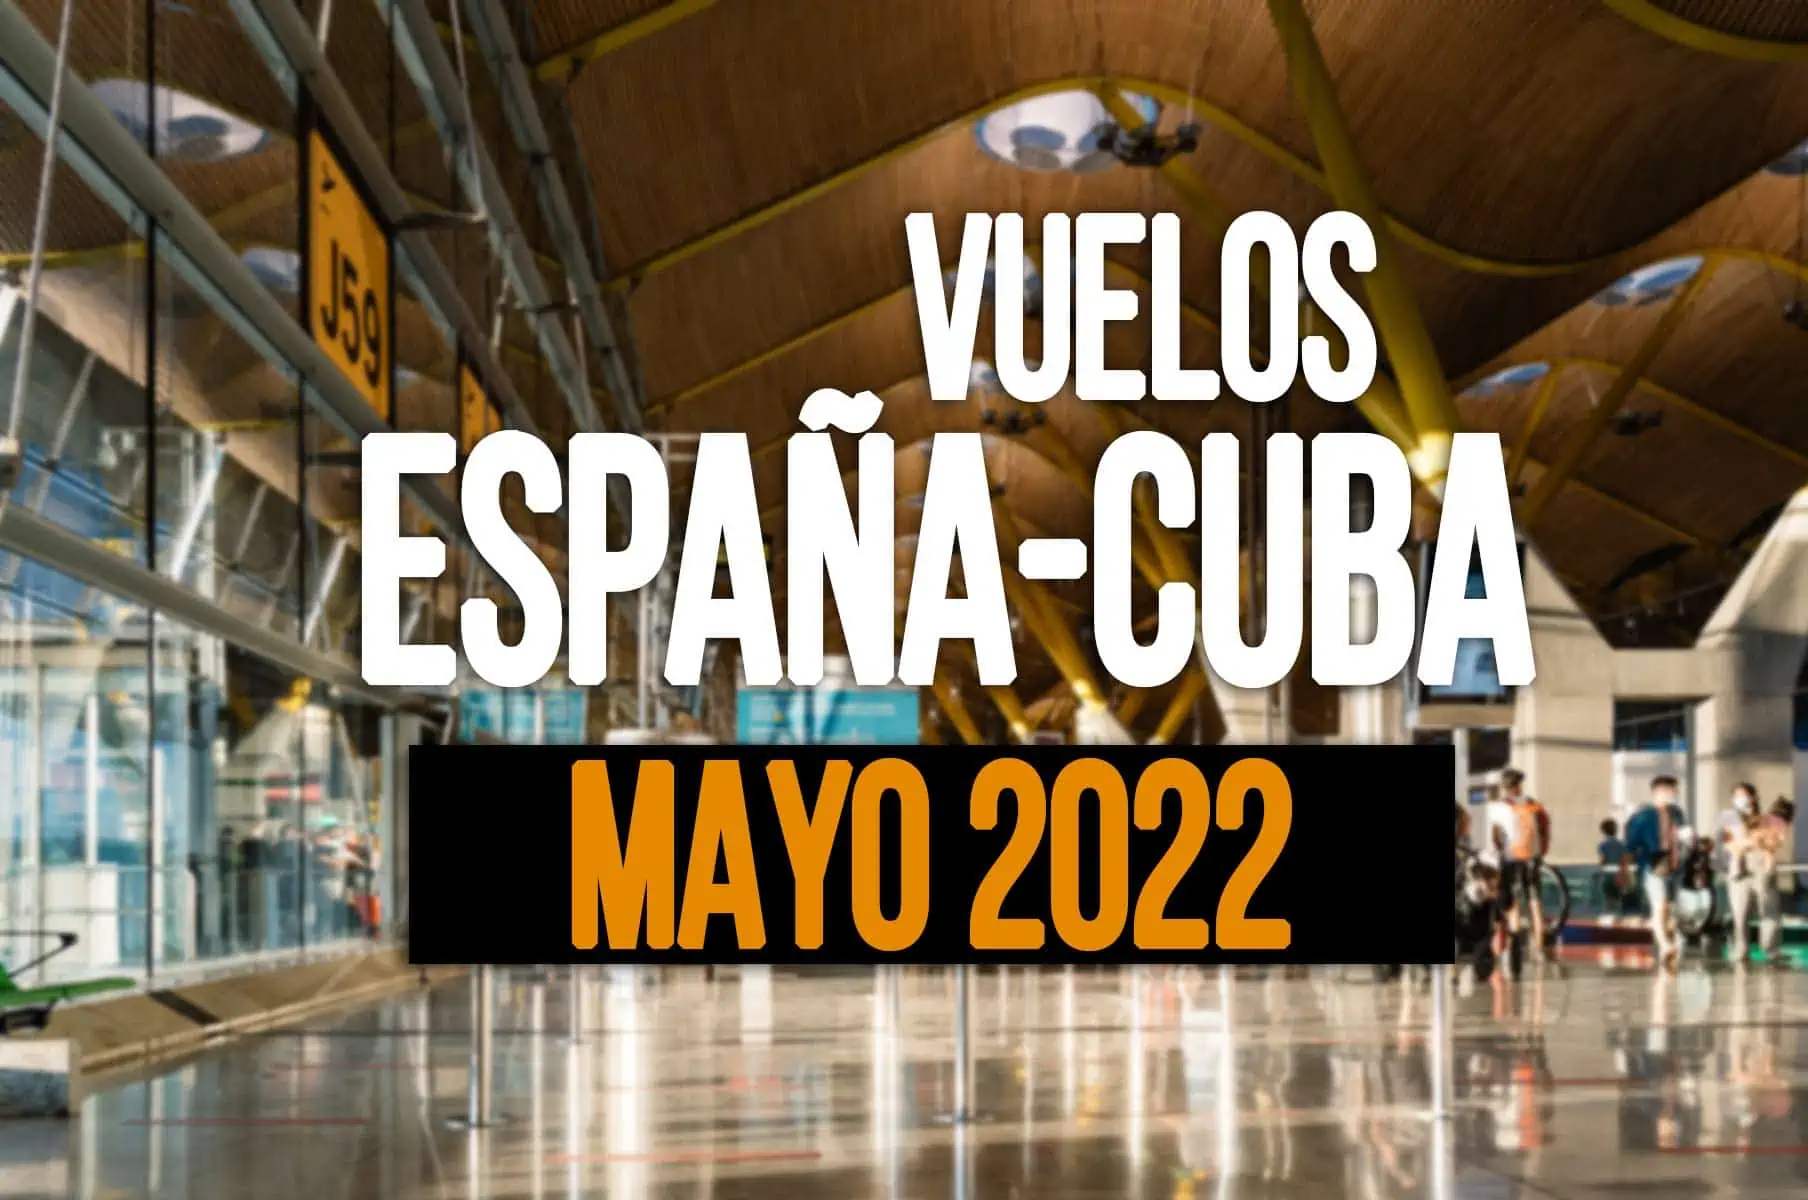 VUELOS Espana Cuba mayo 2022